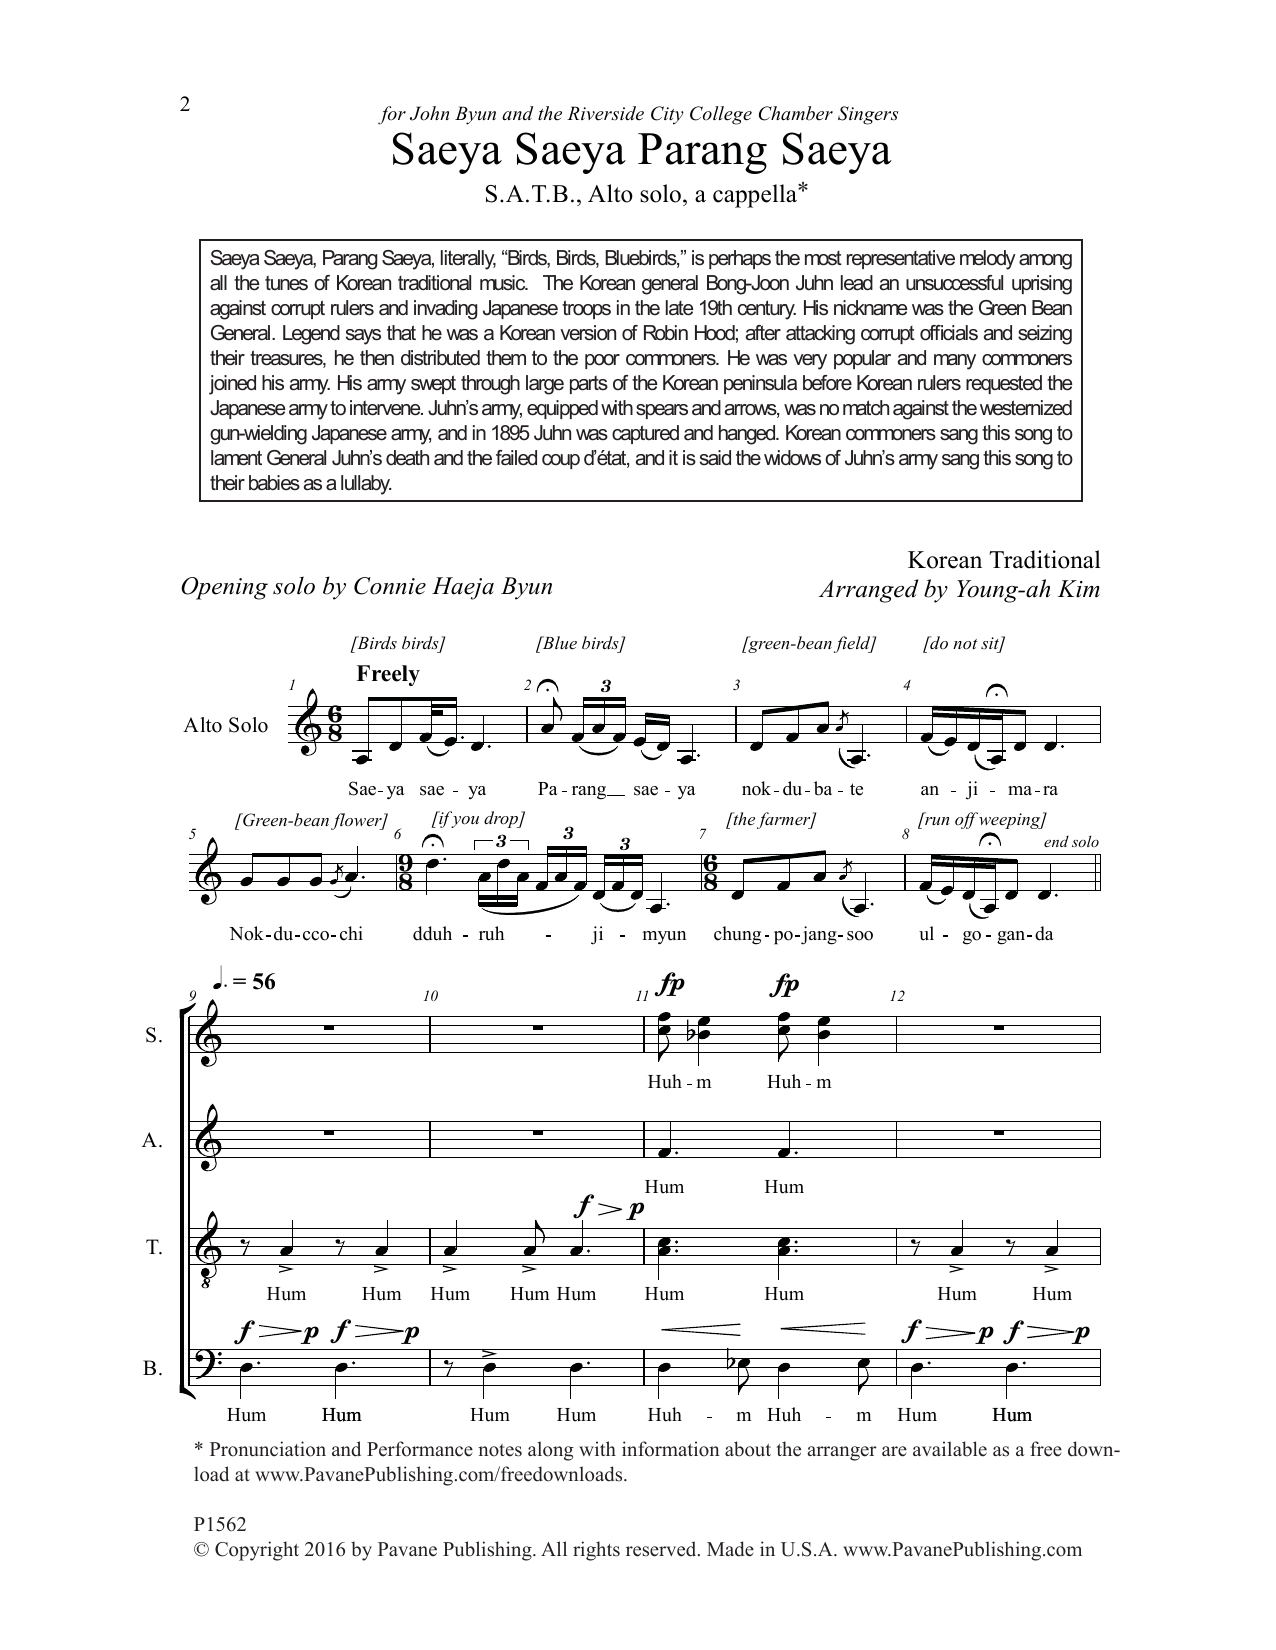 Download Young-Ah Kim Saeya Saeya Parang Saeya Sheet Music and learn how to play SATB Choir PDF digital score in minutes